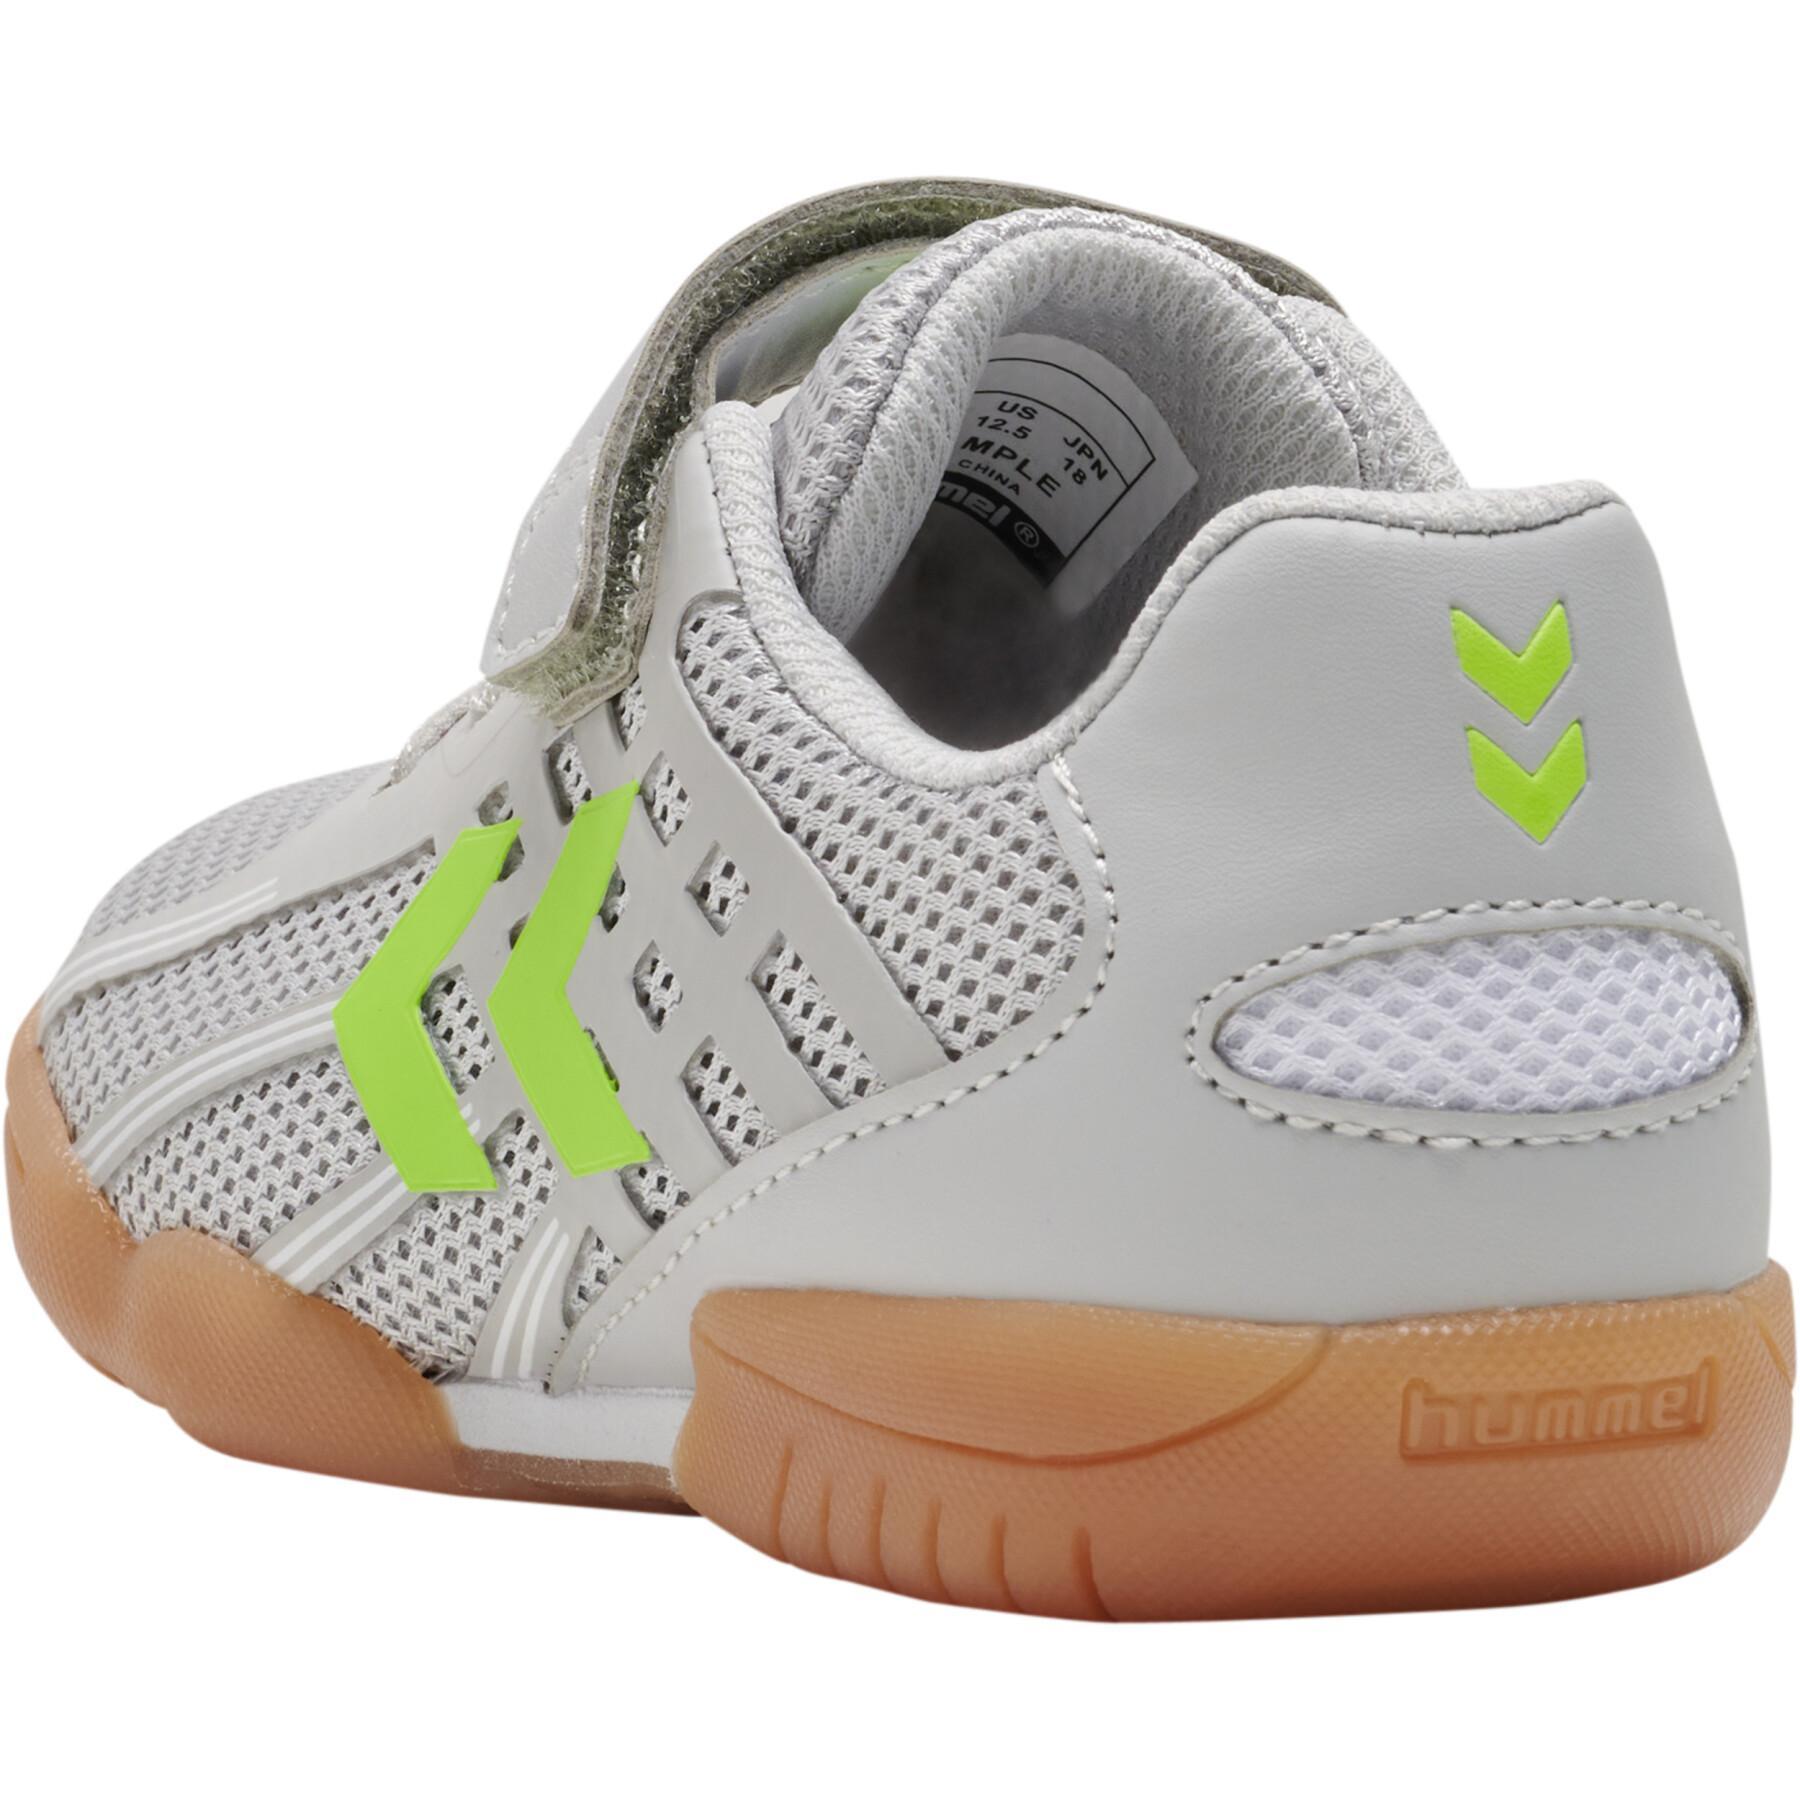 Indoor shoes for children Hummel Root Elite VC